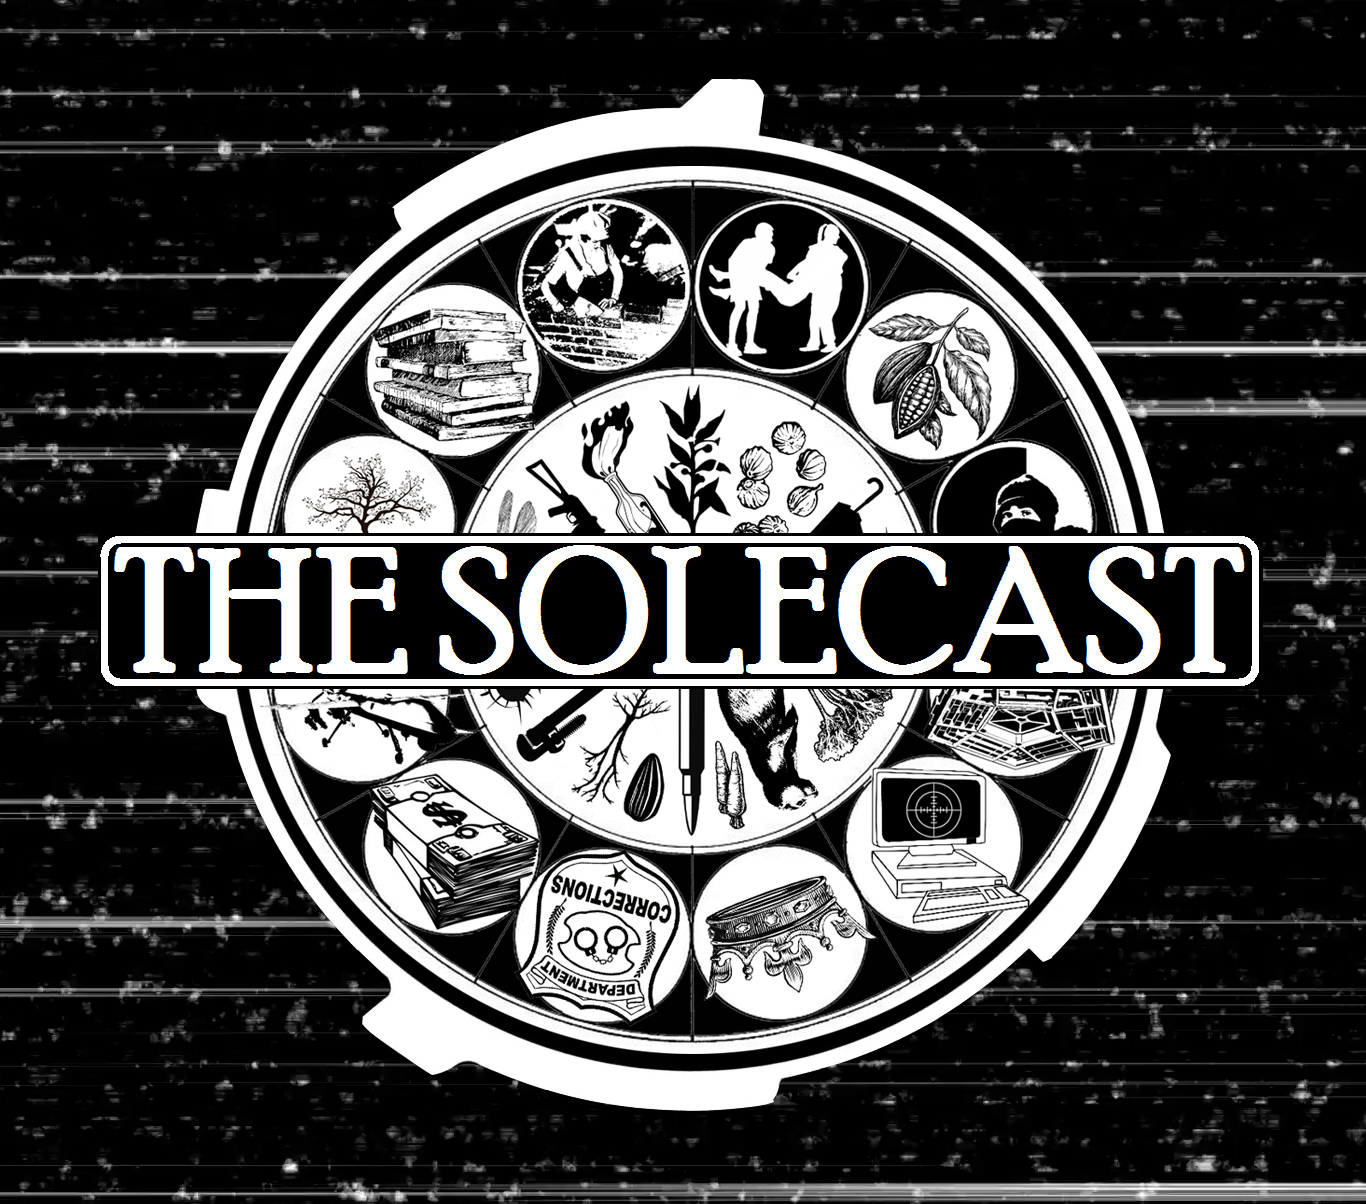 The Solecast logo